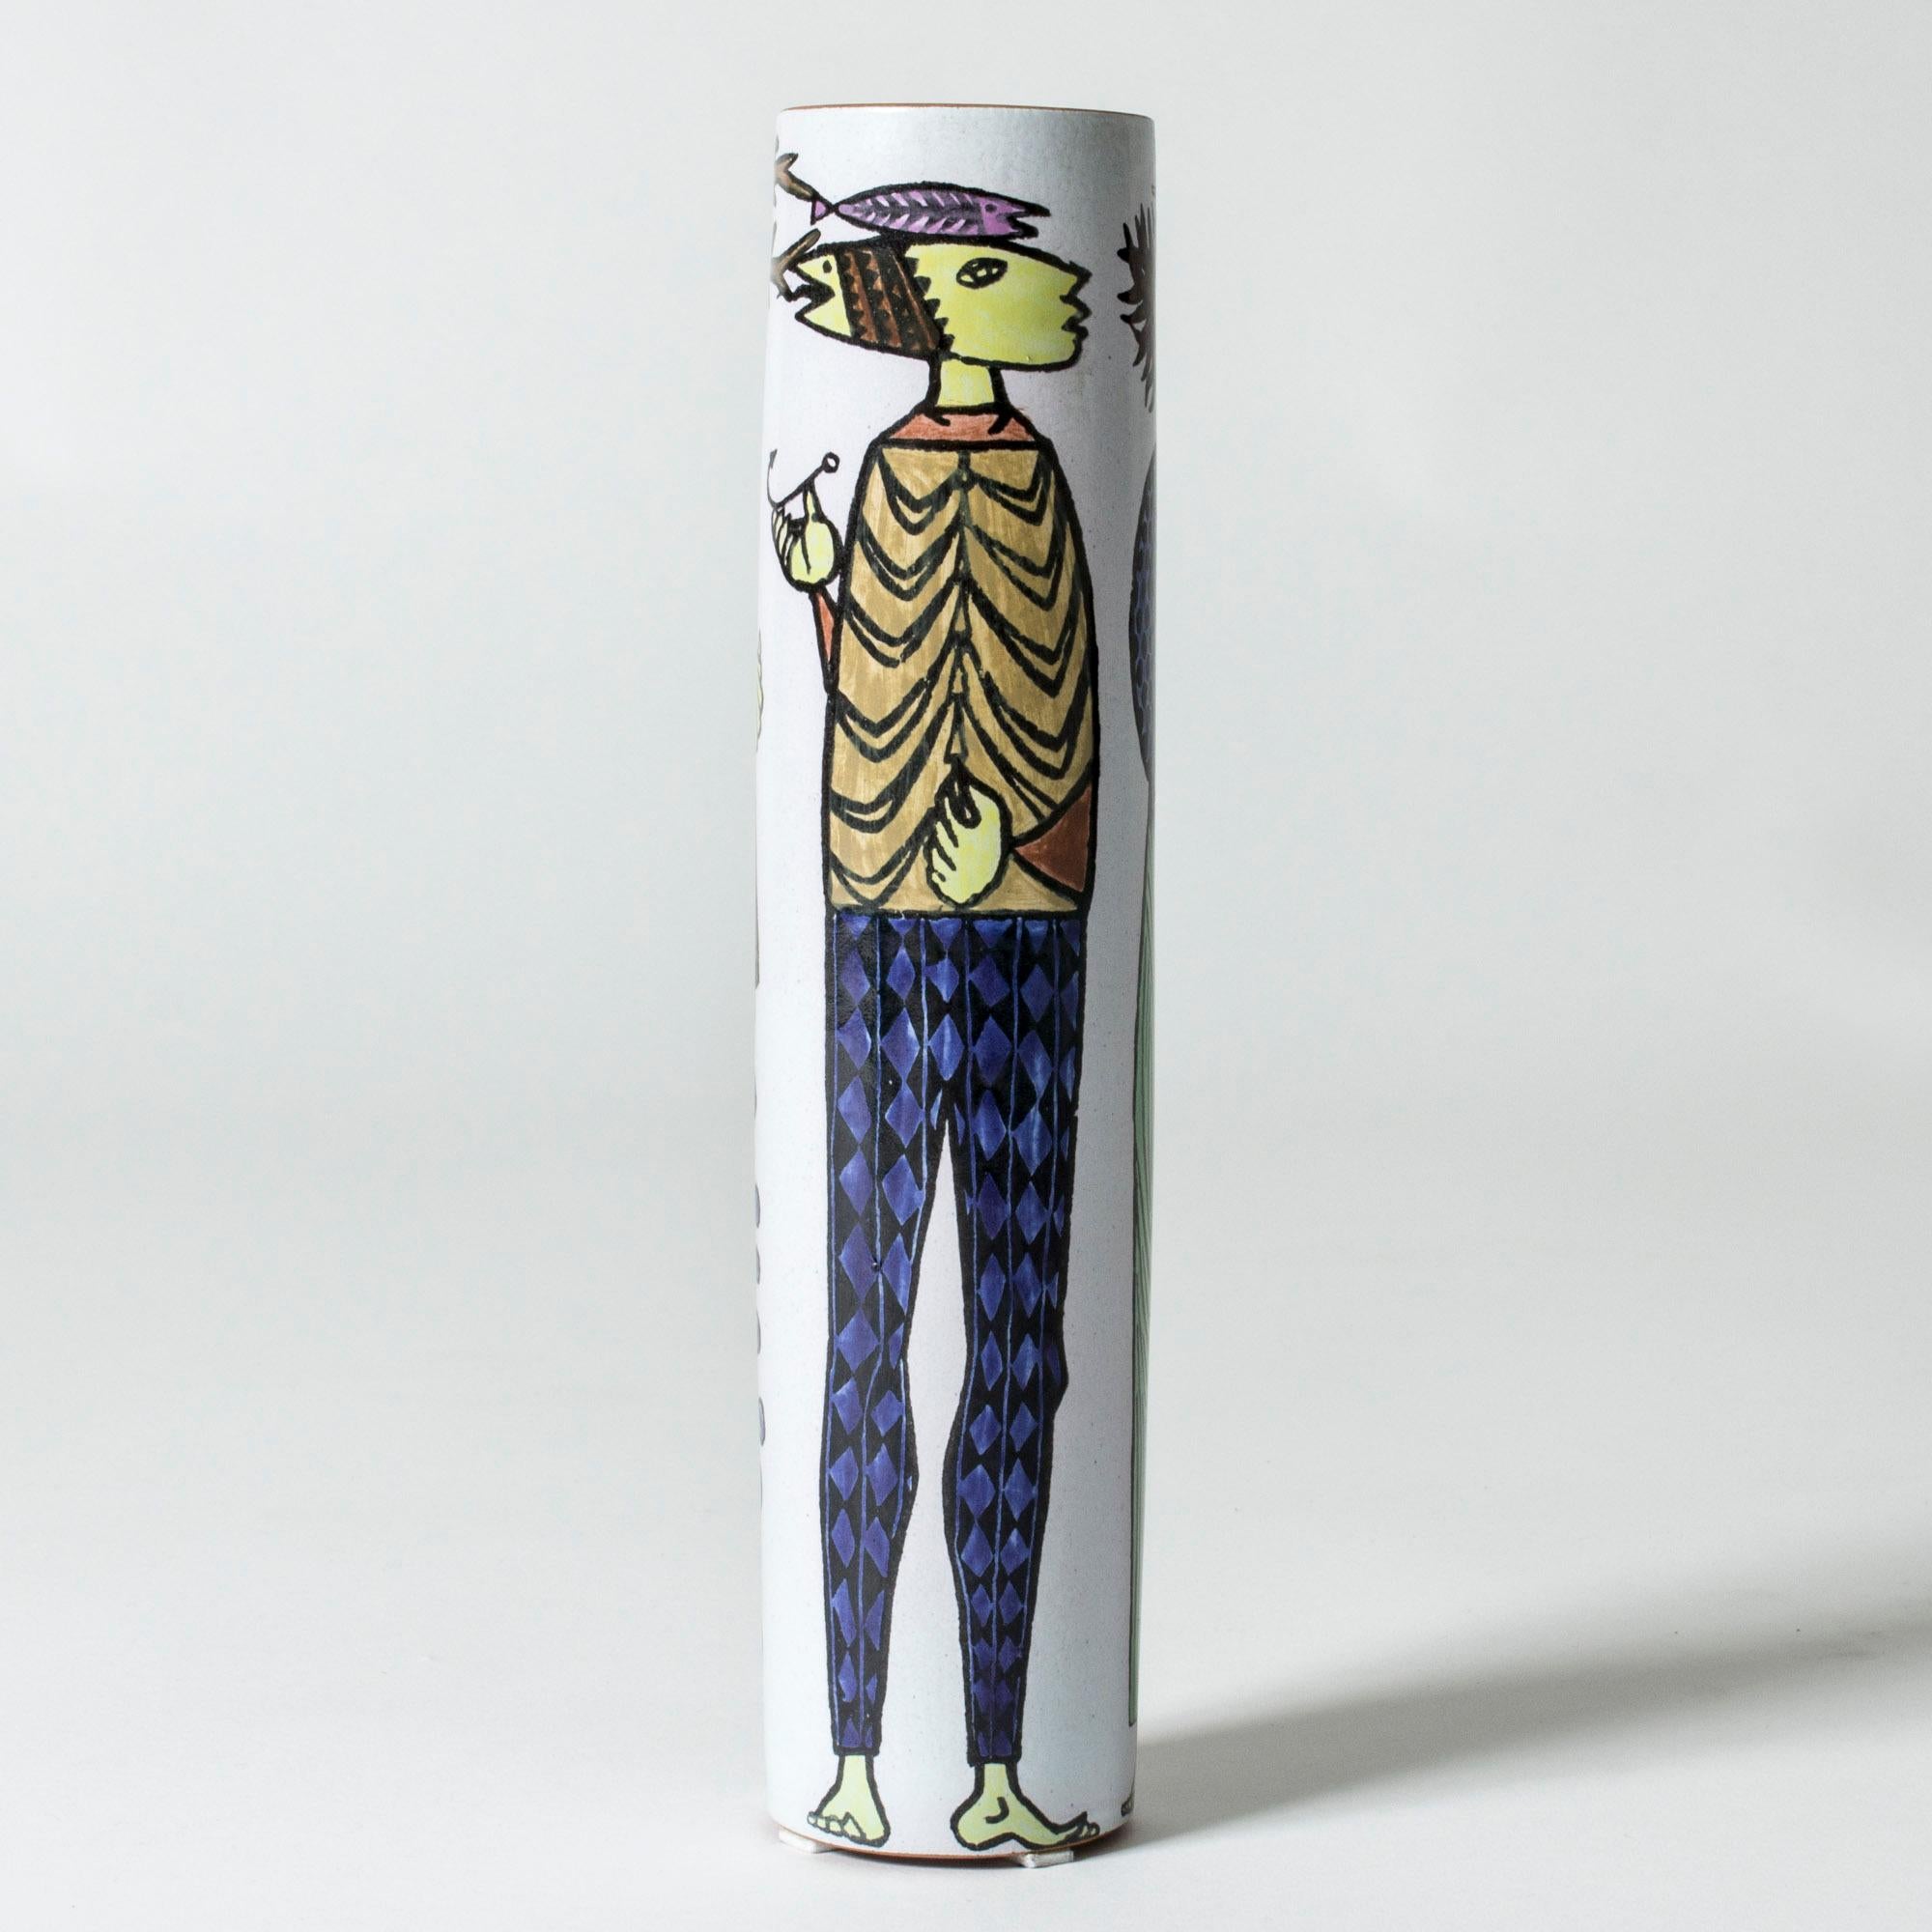 Fayence-Vase „Karneval“ von Stig Lindberg (Skandinavische Moderne) im Angebot